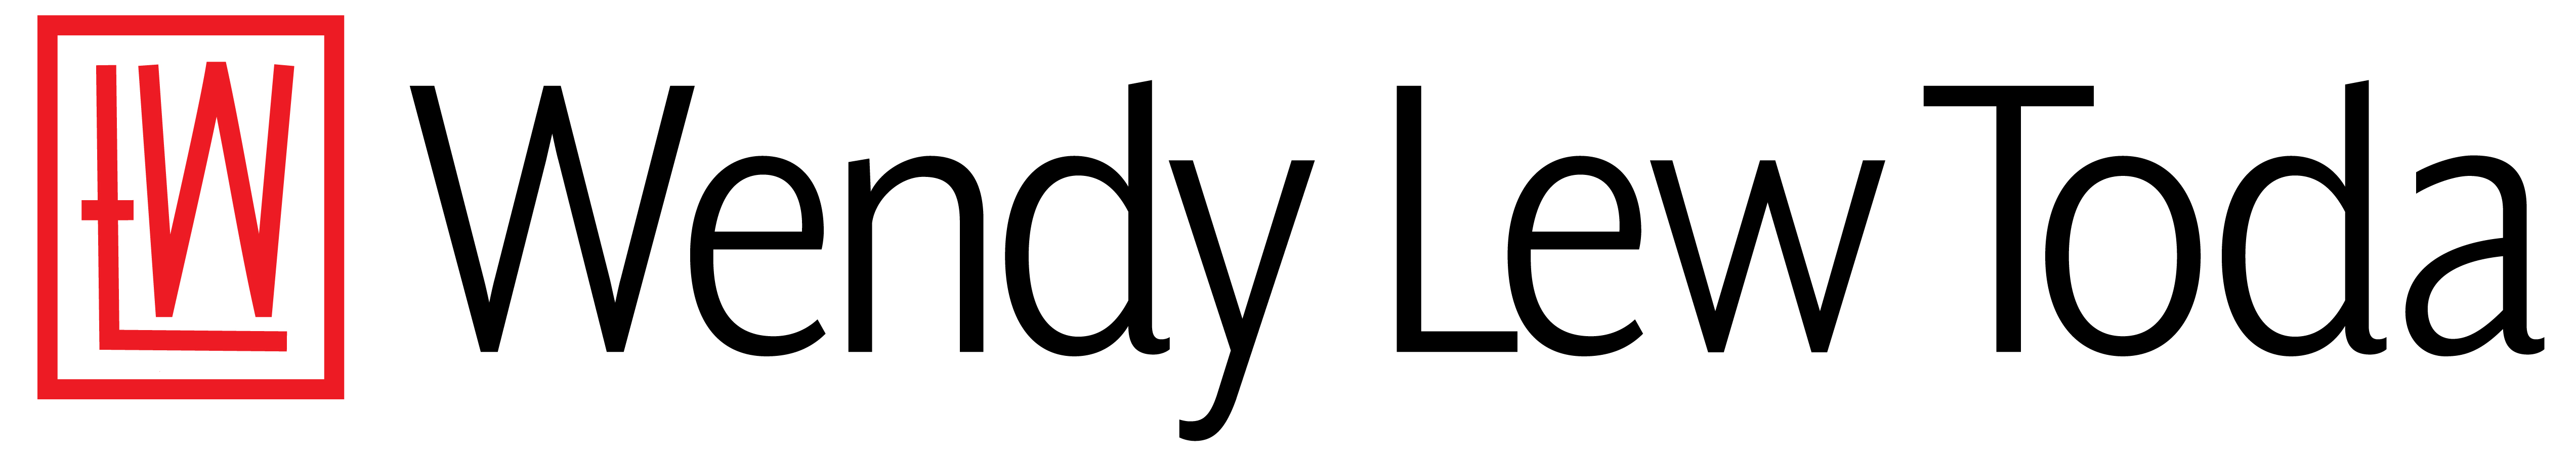 Wendy Lew Toda logo